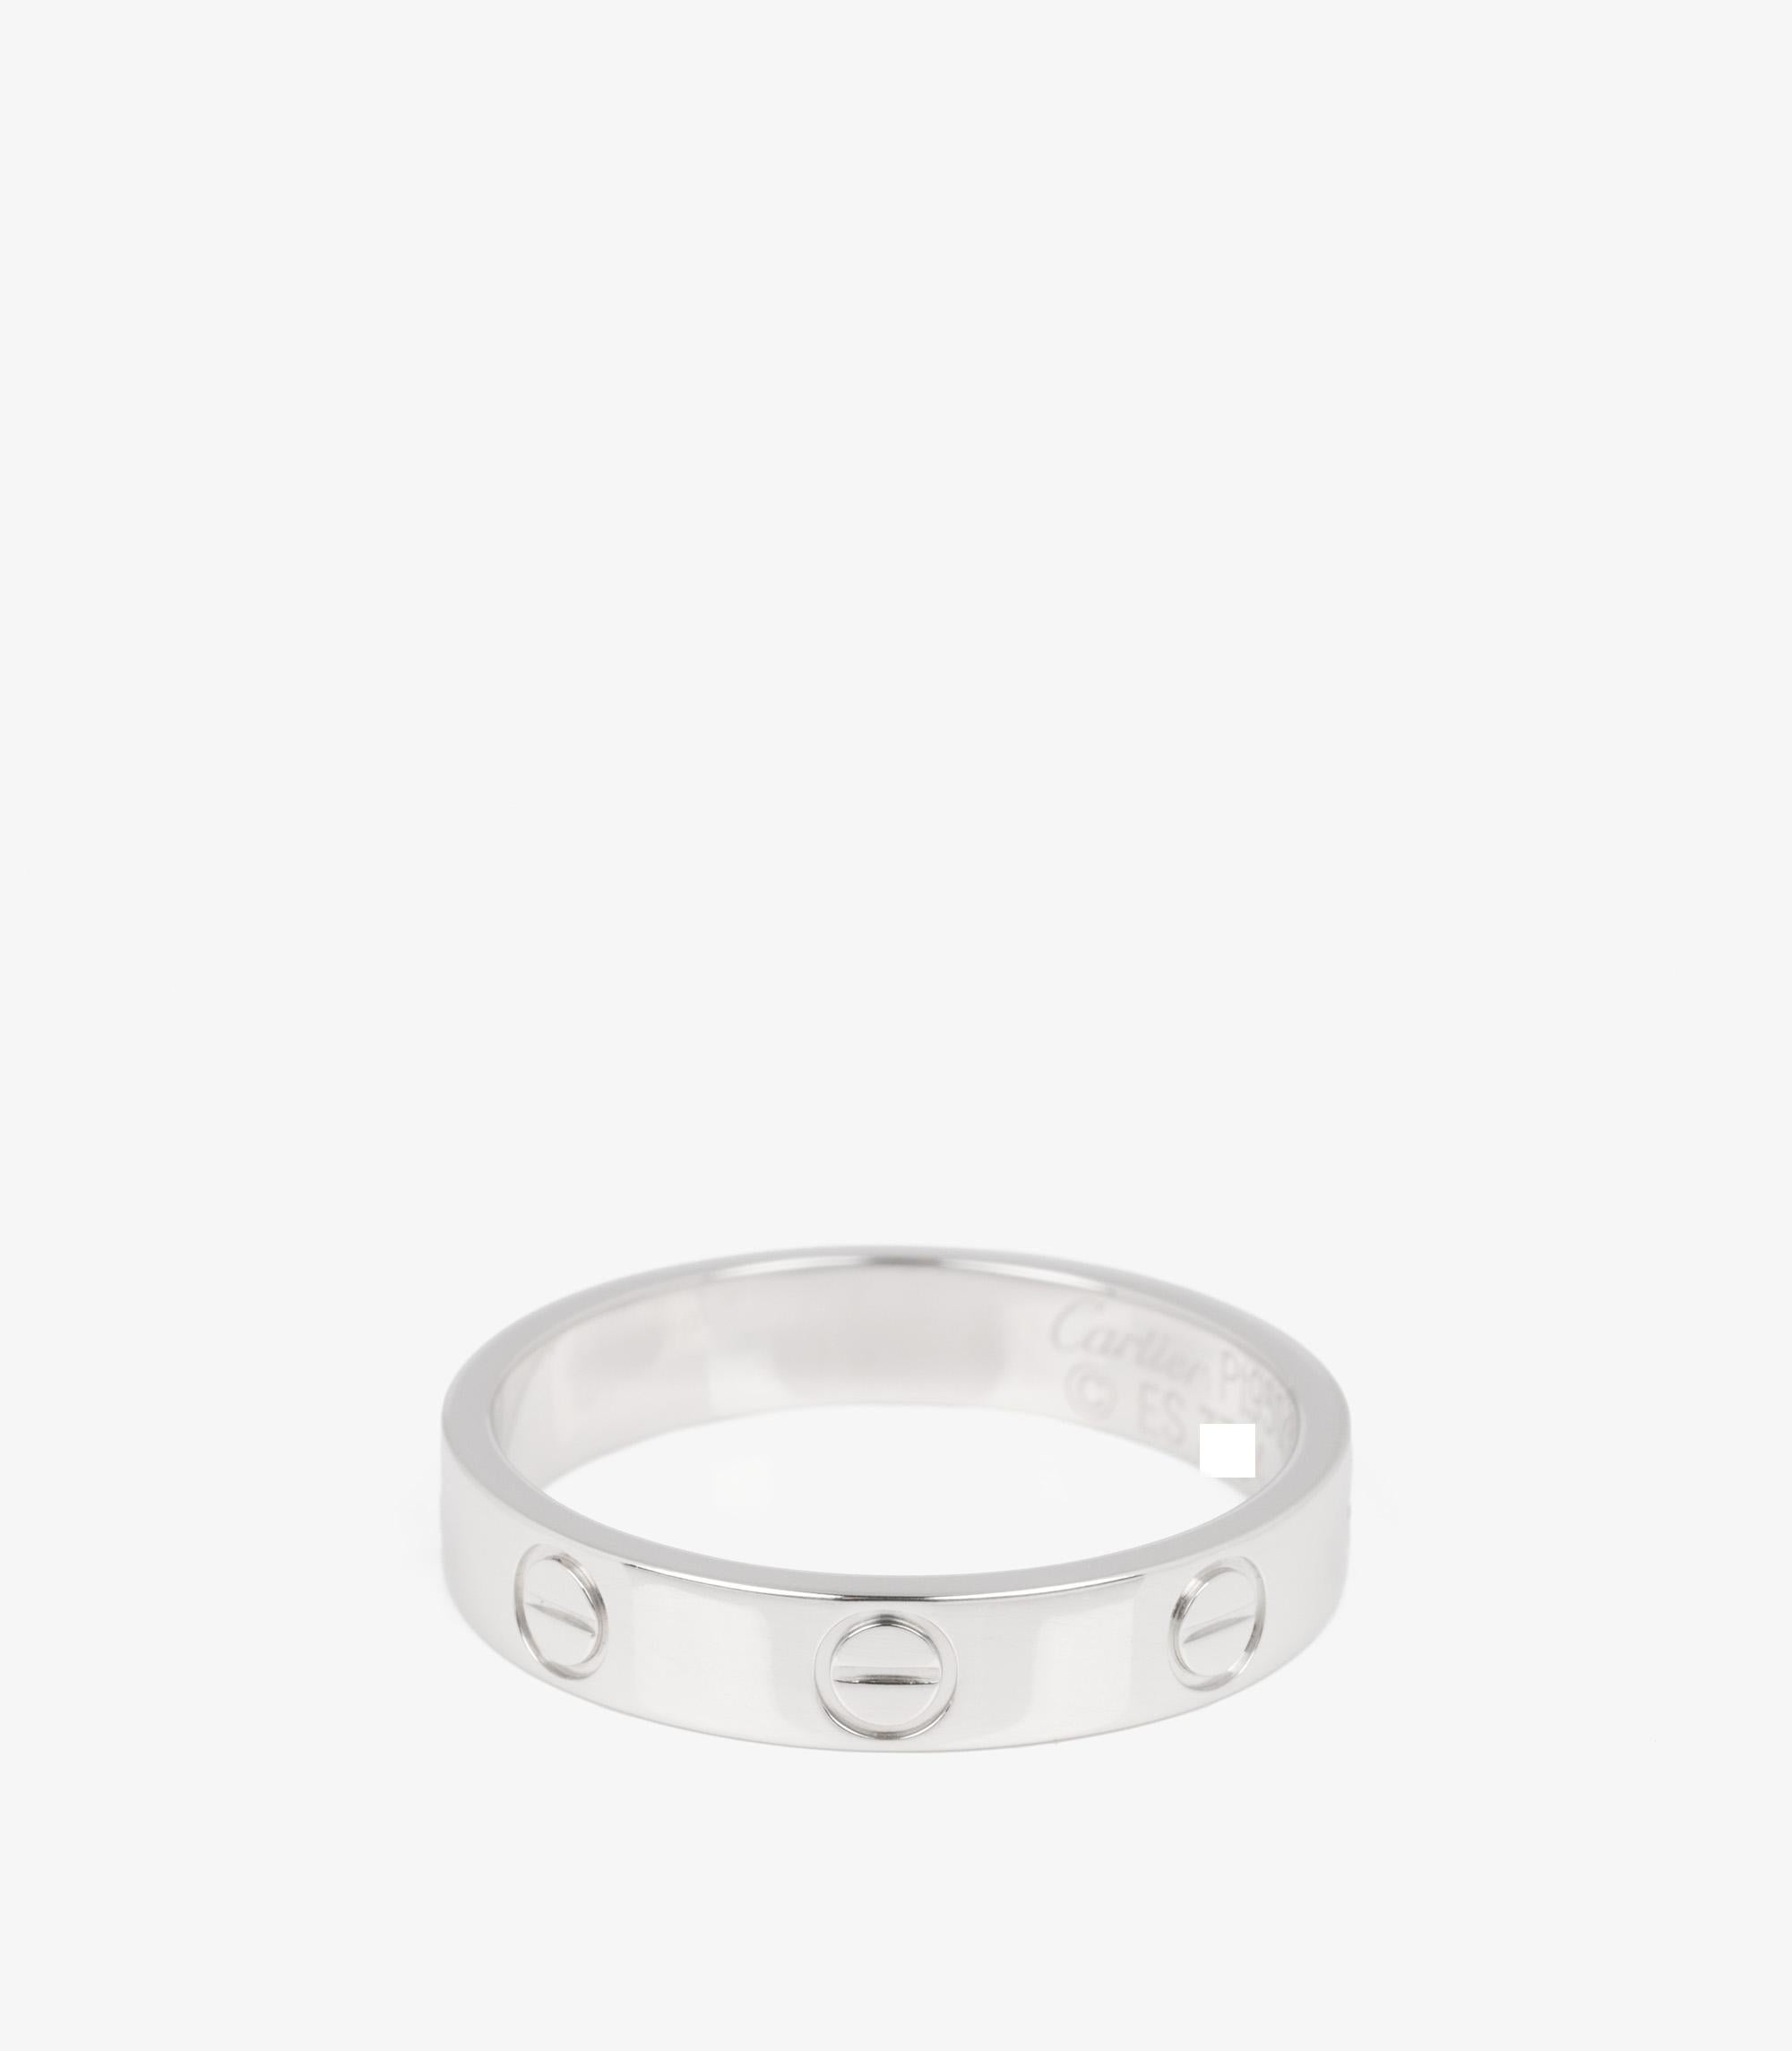 Cartier Platin Ehering Love Band Ring

Marke- Cartier
Modell- Love Wedding Band
Produkttyp- Ring
Seriennummer - ES****
Alter- Circa 2006
Begleitet von- Cartier Zertifikat
MATERIAL(e)- Platin
UK Ring Größe- M 1/2
EU-Ringgröße - 53
US-Ringgröße - 6